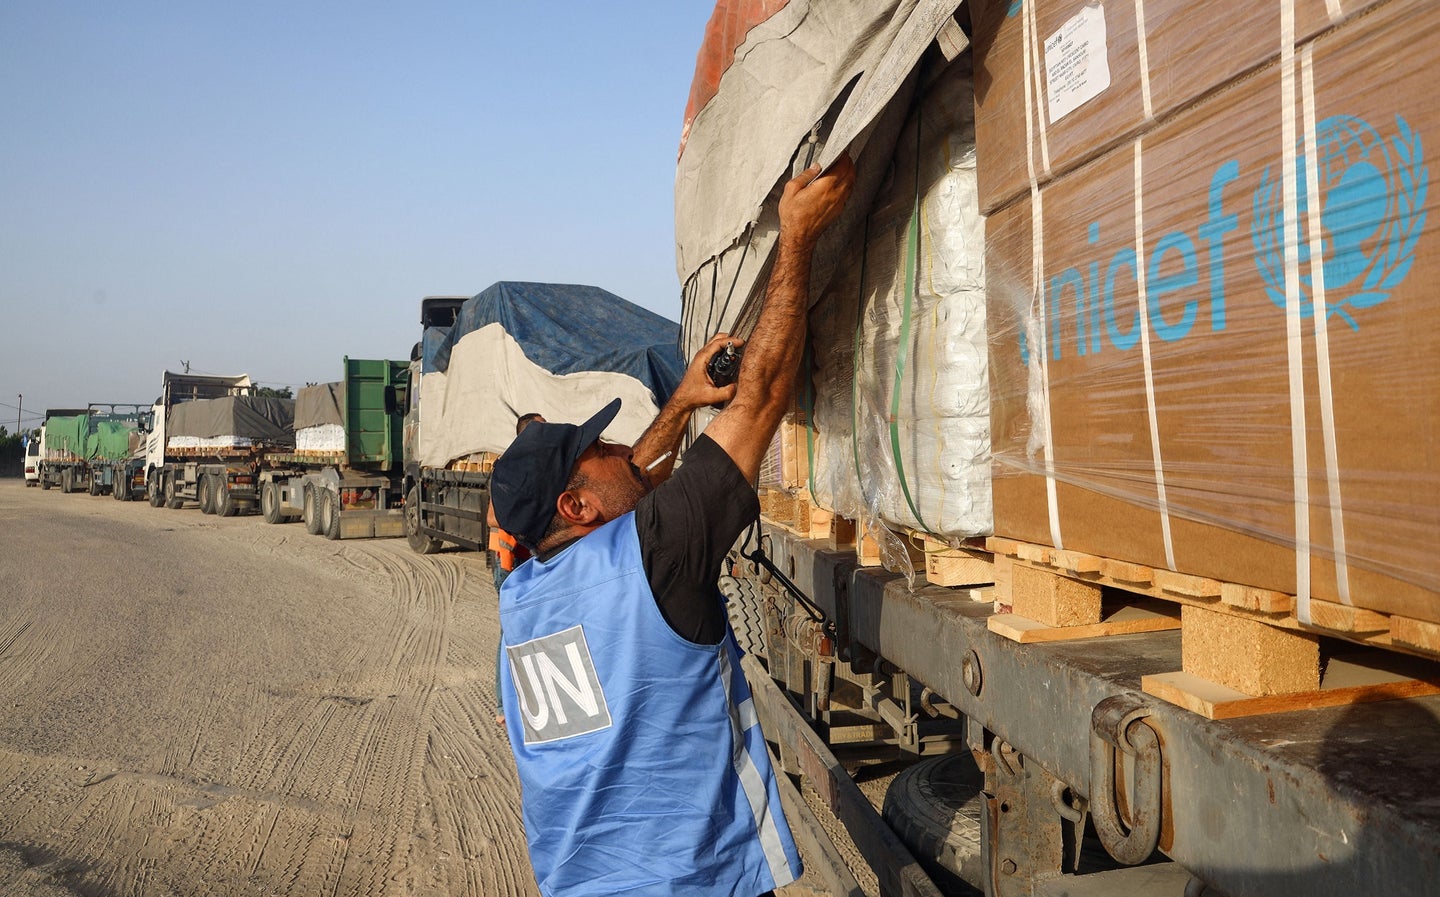 UN worker checking humanitarian aid trucks crossing into the Gaza Strip